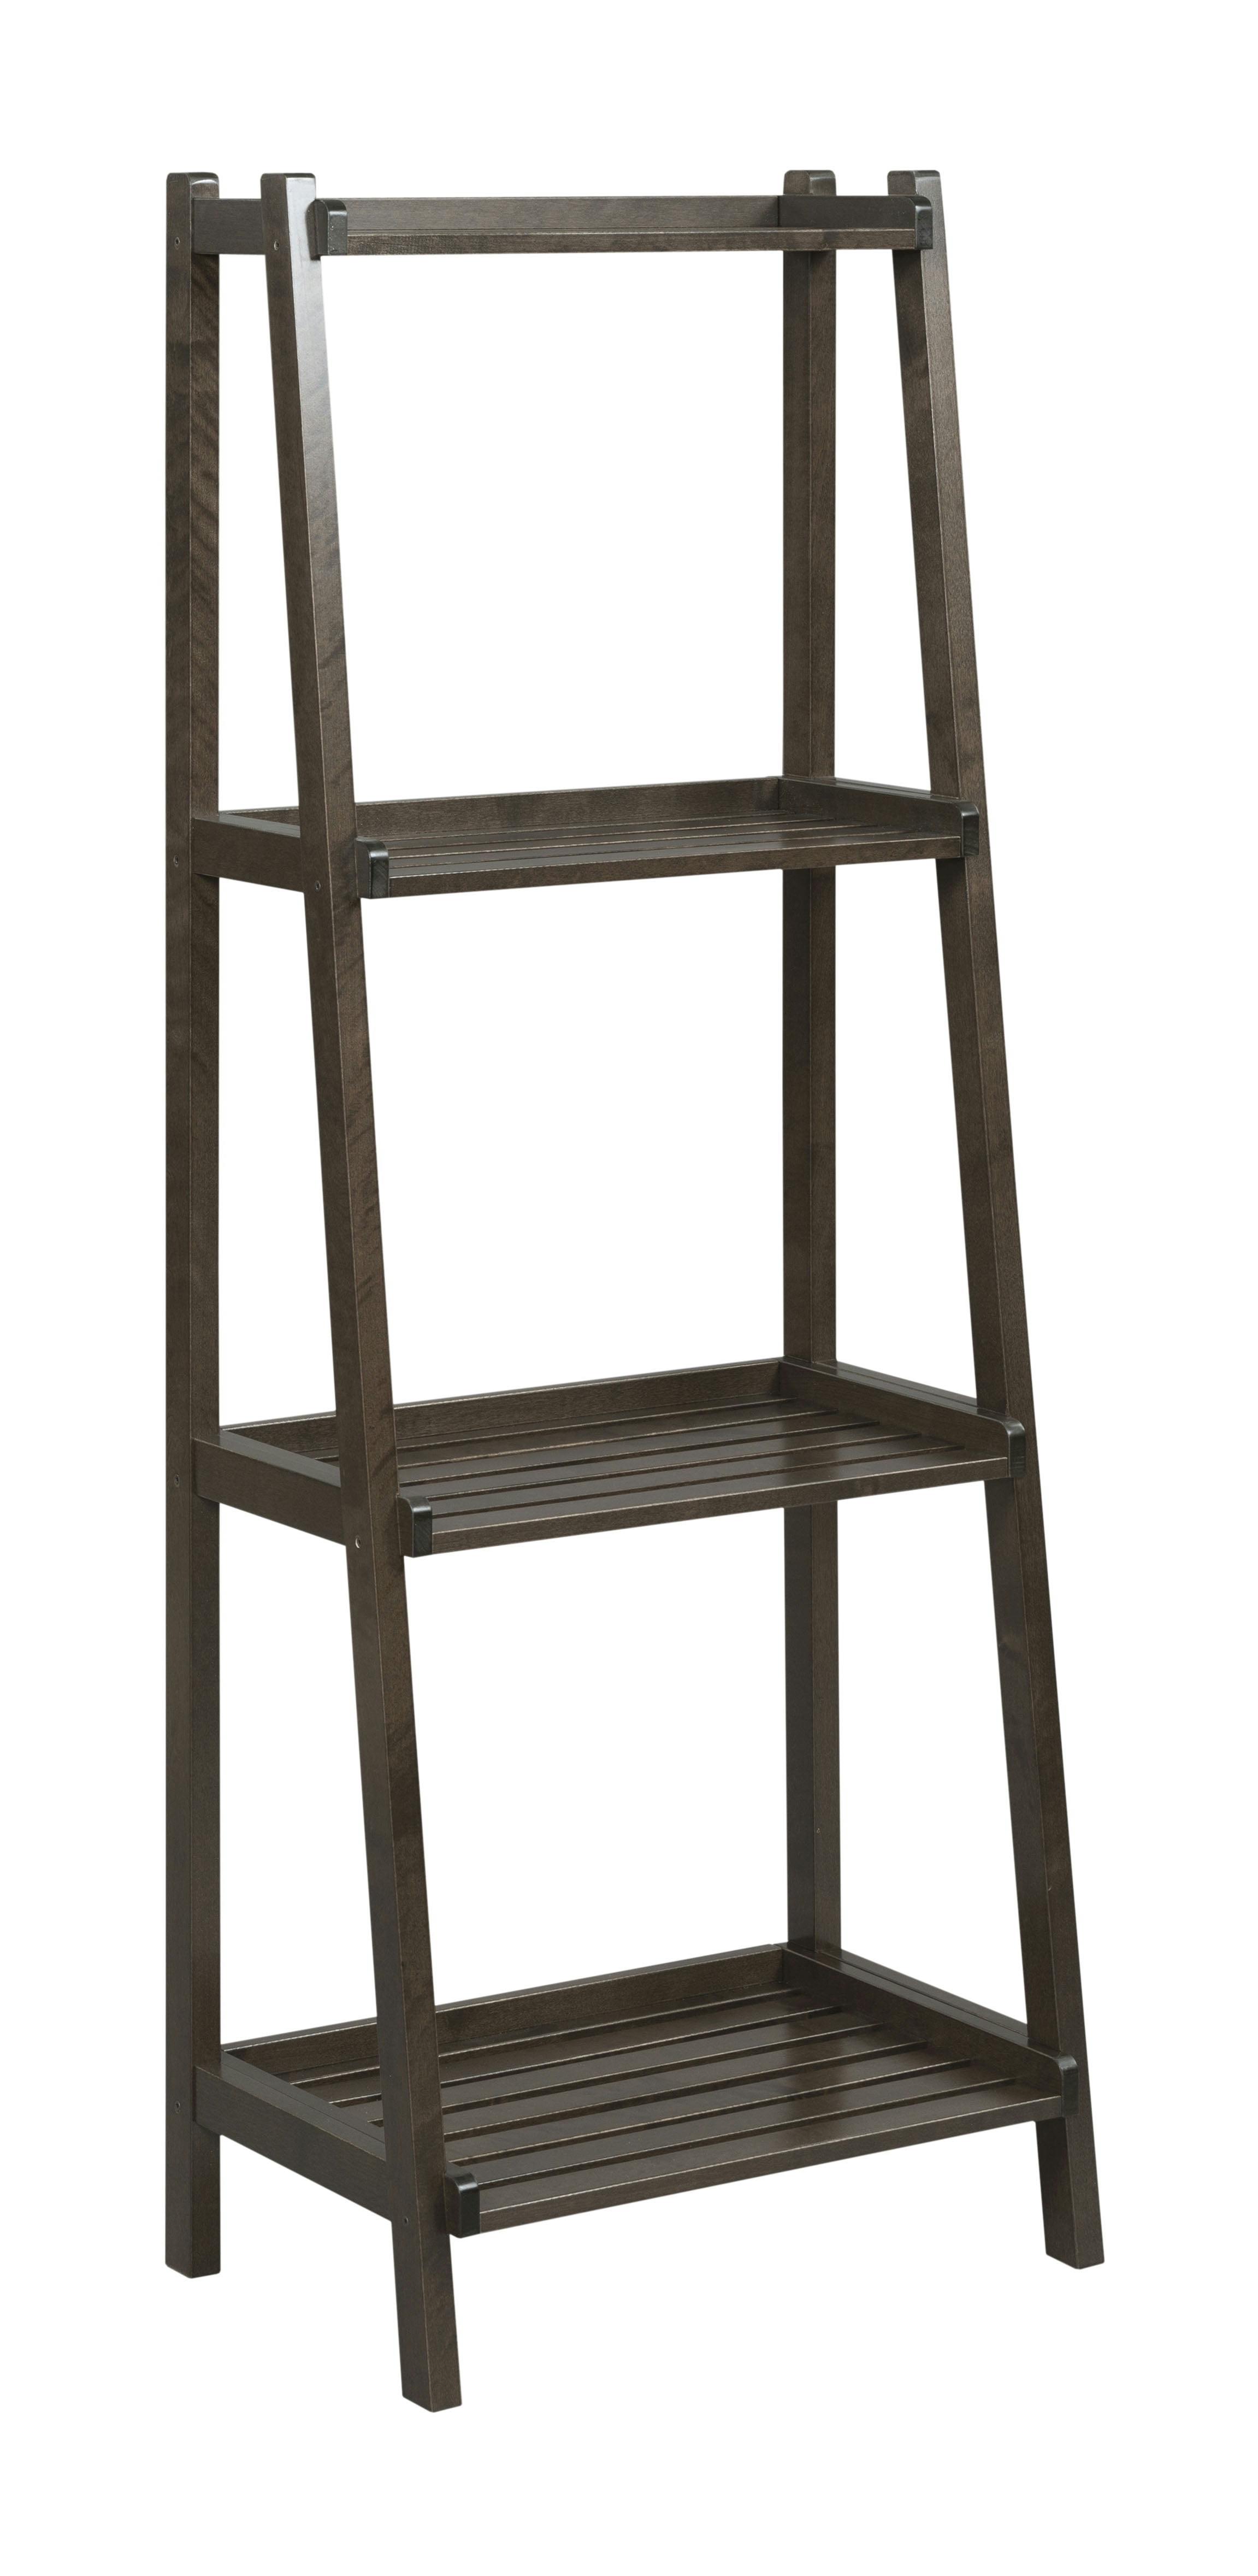 Espresso Birch Wood 4-Tier Ladder Bookshelf for Tight Spaces